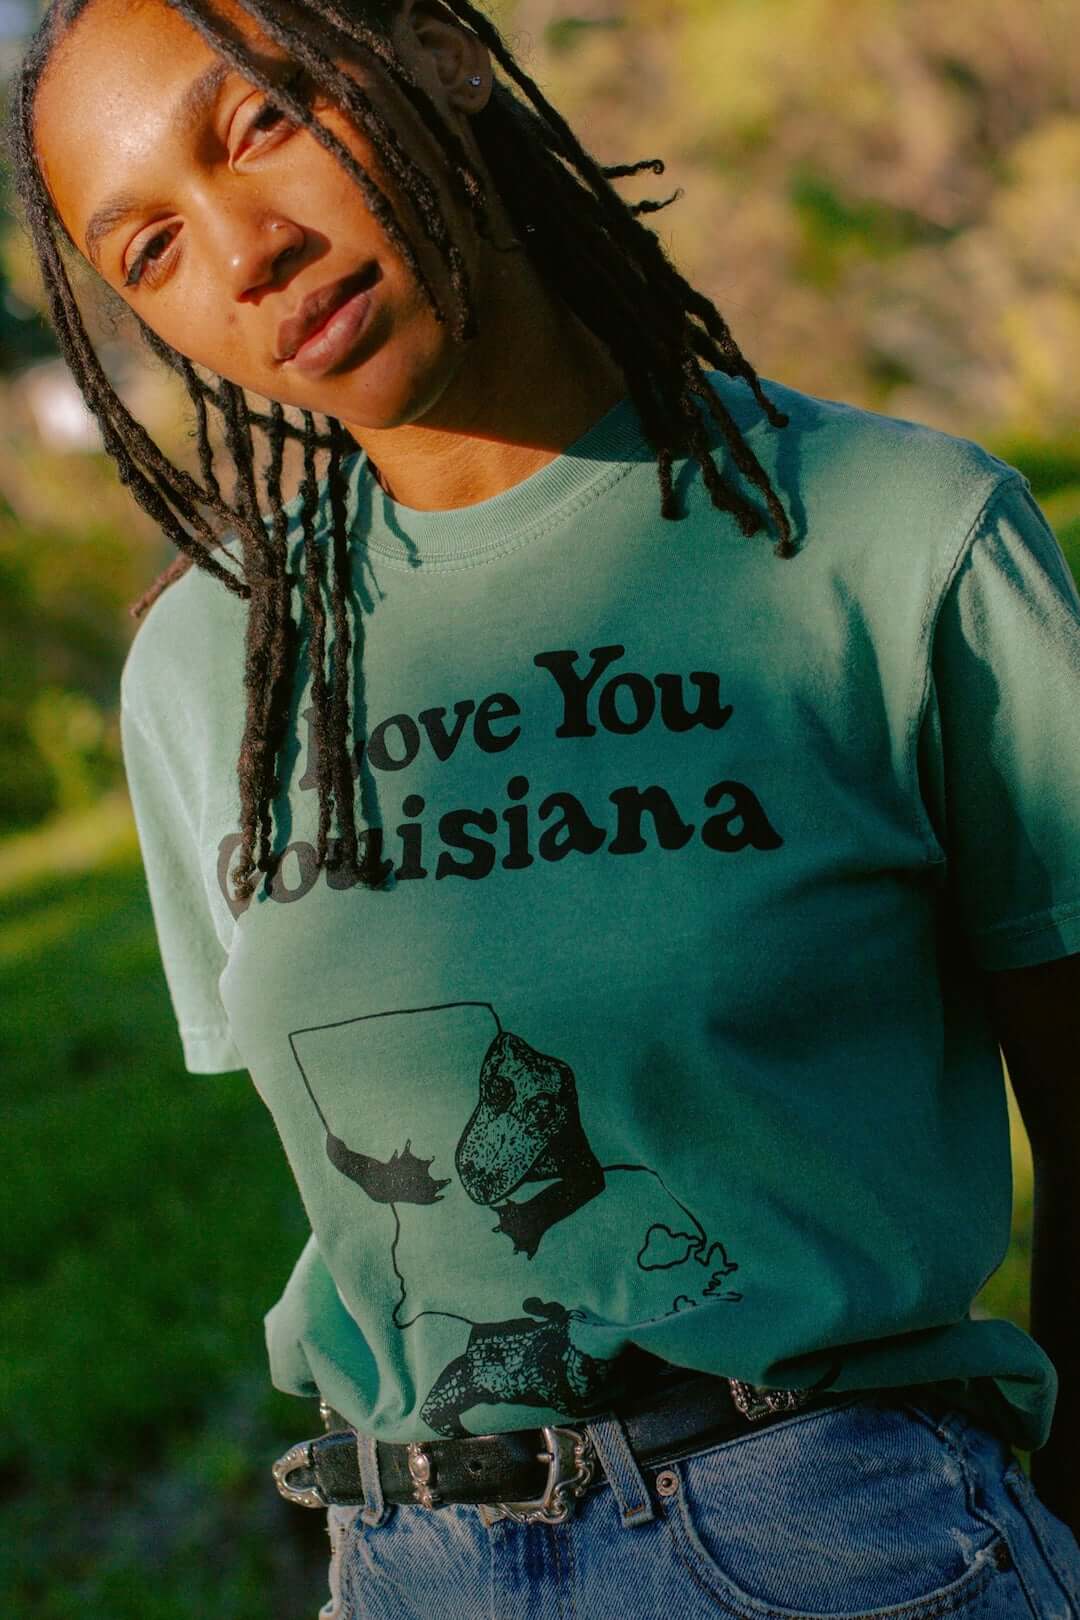 Louisiana Home Shirt / Louisiana Girl Tee Shirt / Louisiana 